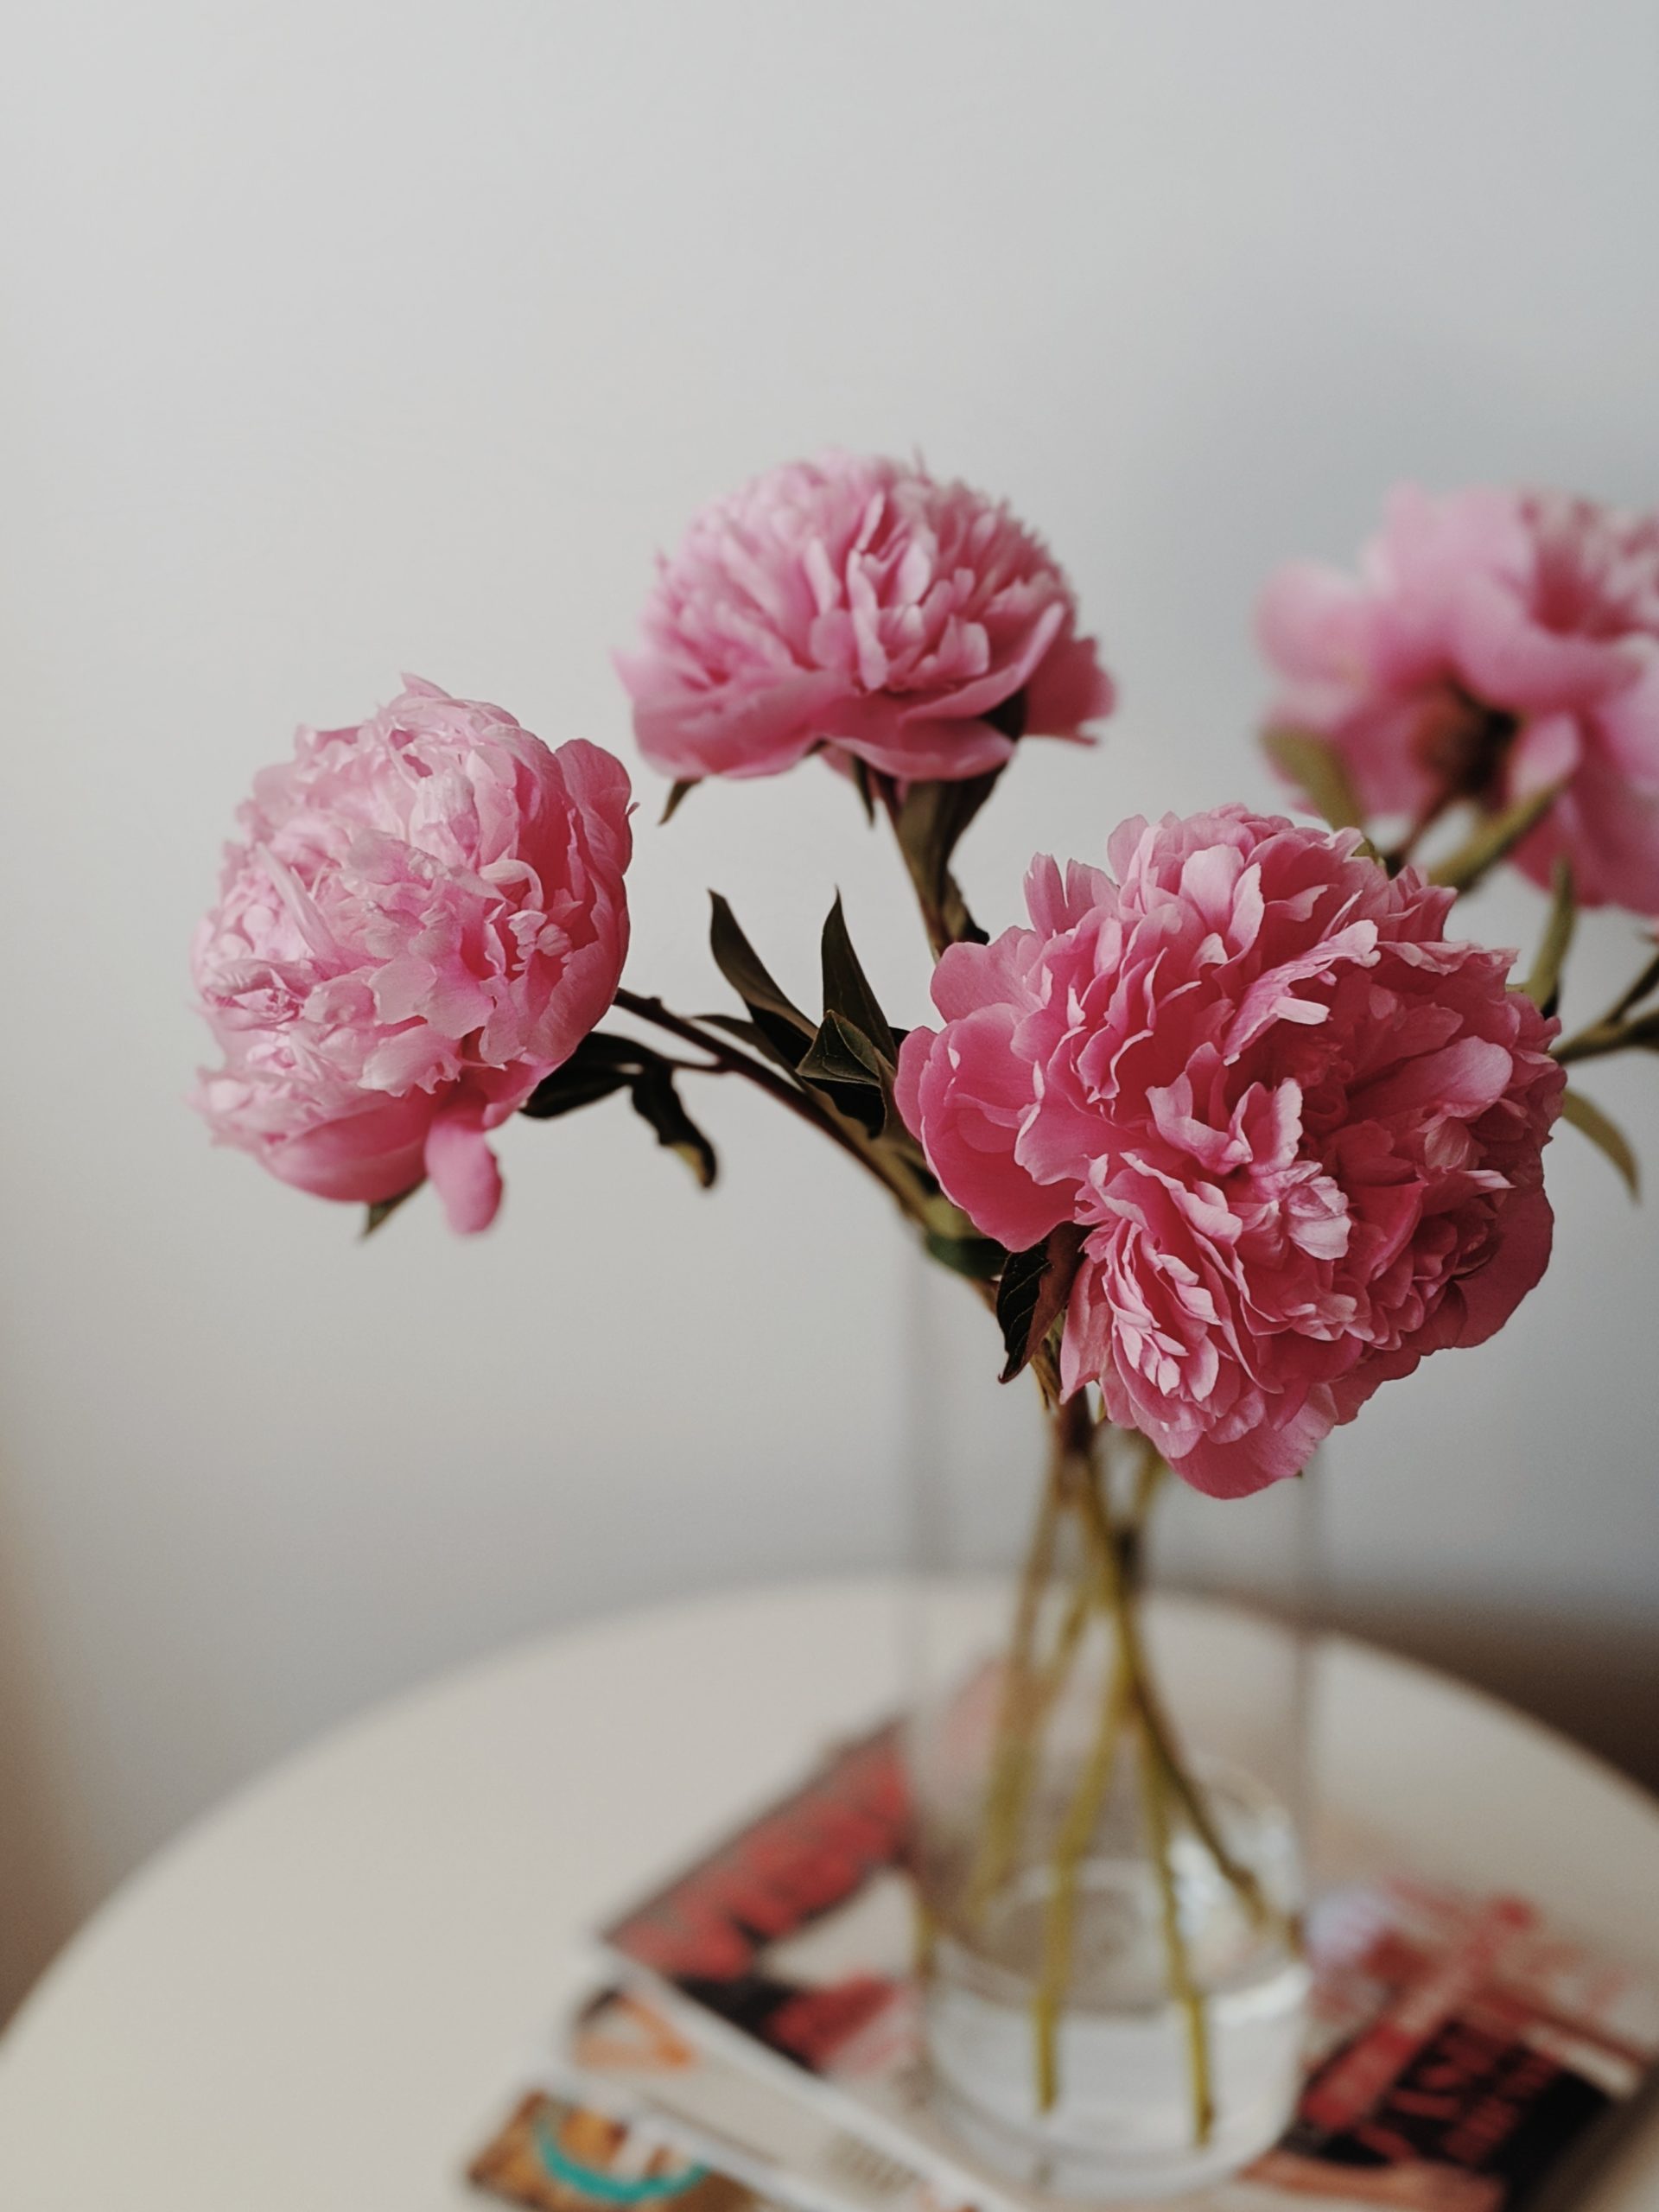 Photo by Valeriia Miller: https://www.pexels.com/photo/pink-flowers-in-clear-glass-vase-3579443/